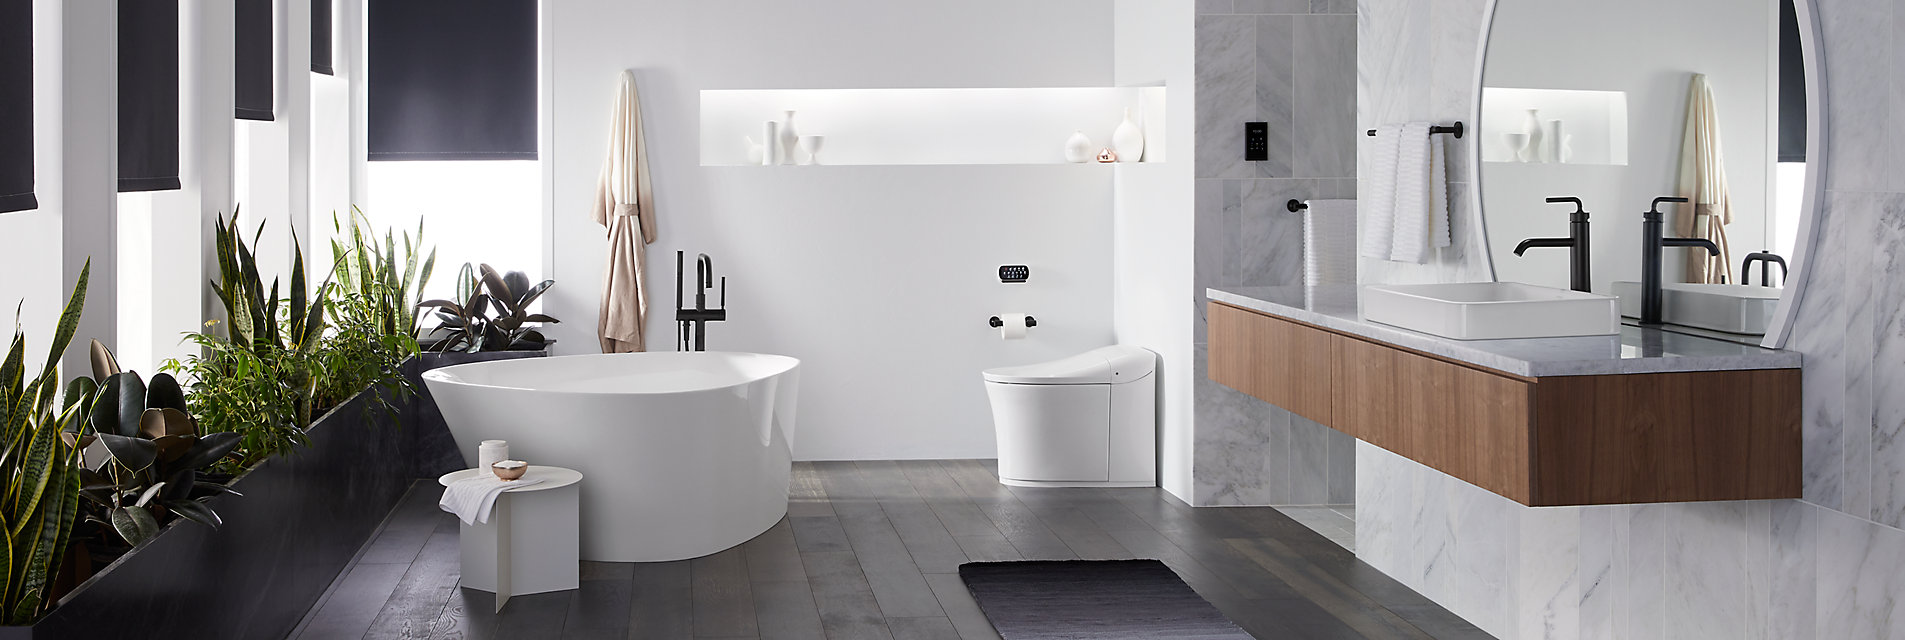 Kohler bathroom with freestanding tub